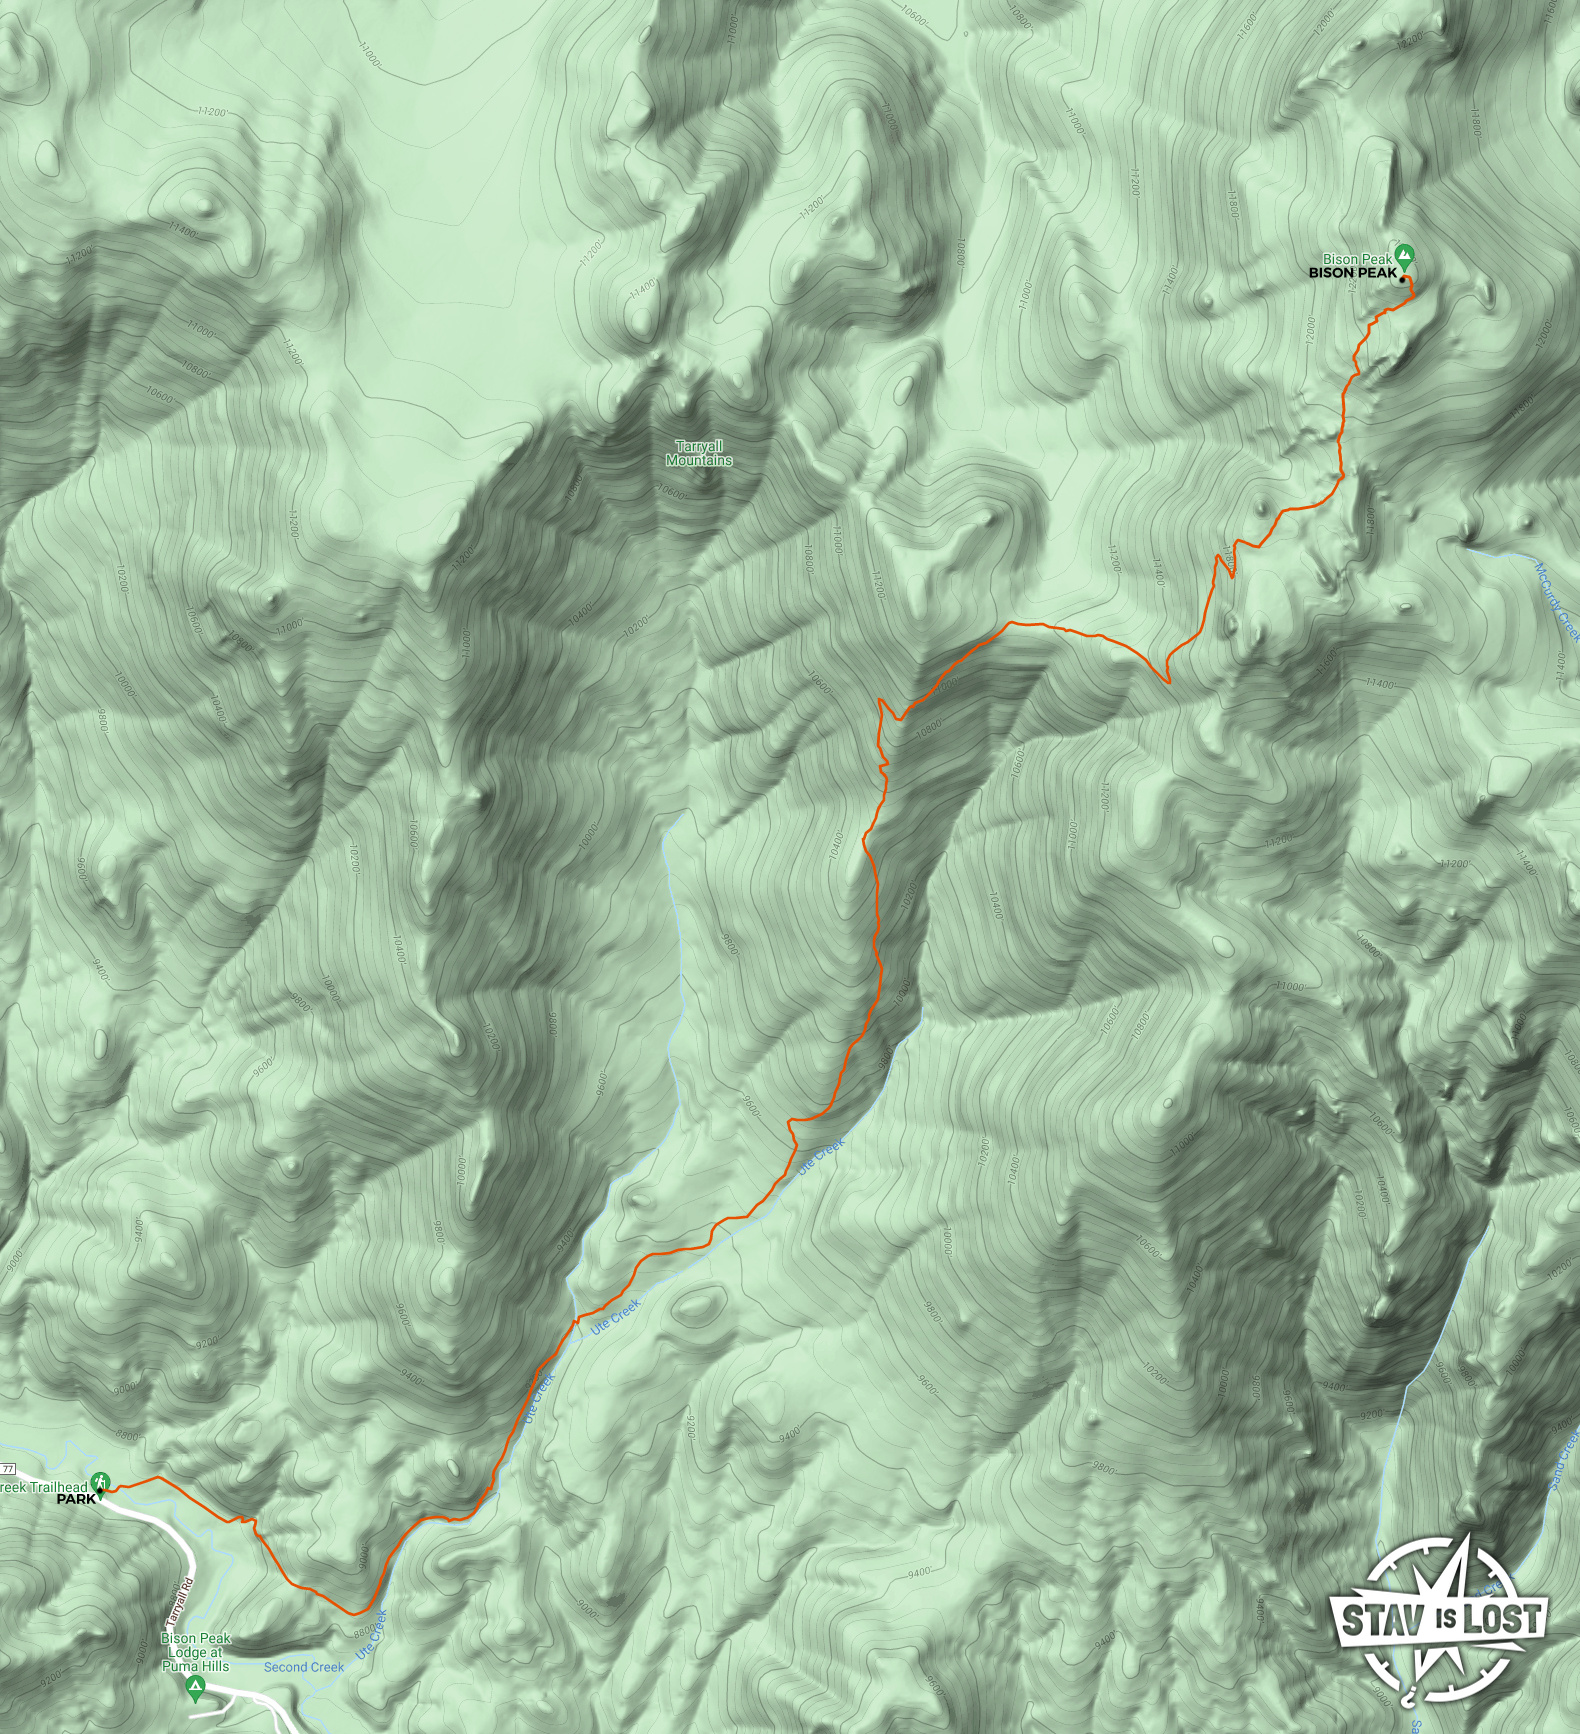 map for Bison Peak via Ute Creek Trail by stav is lost